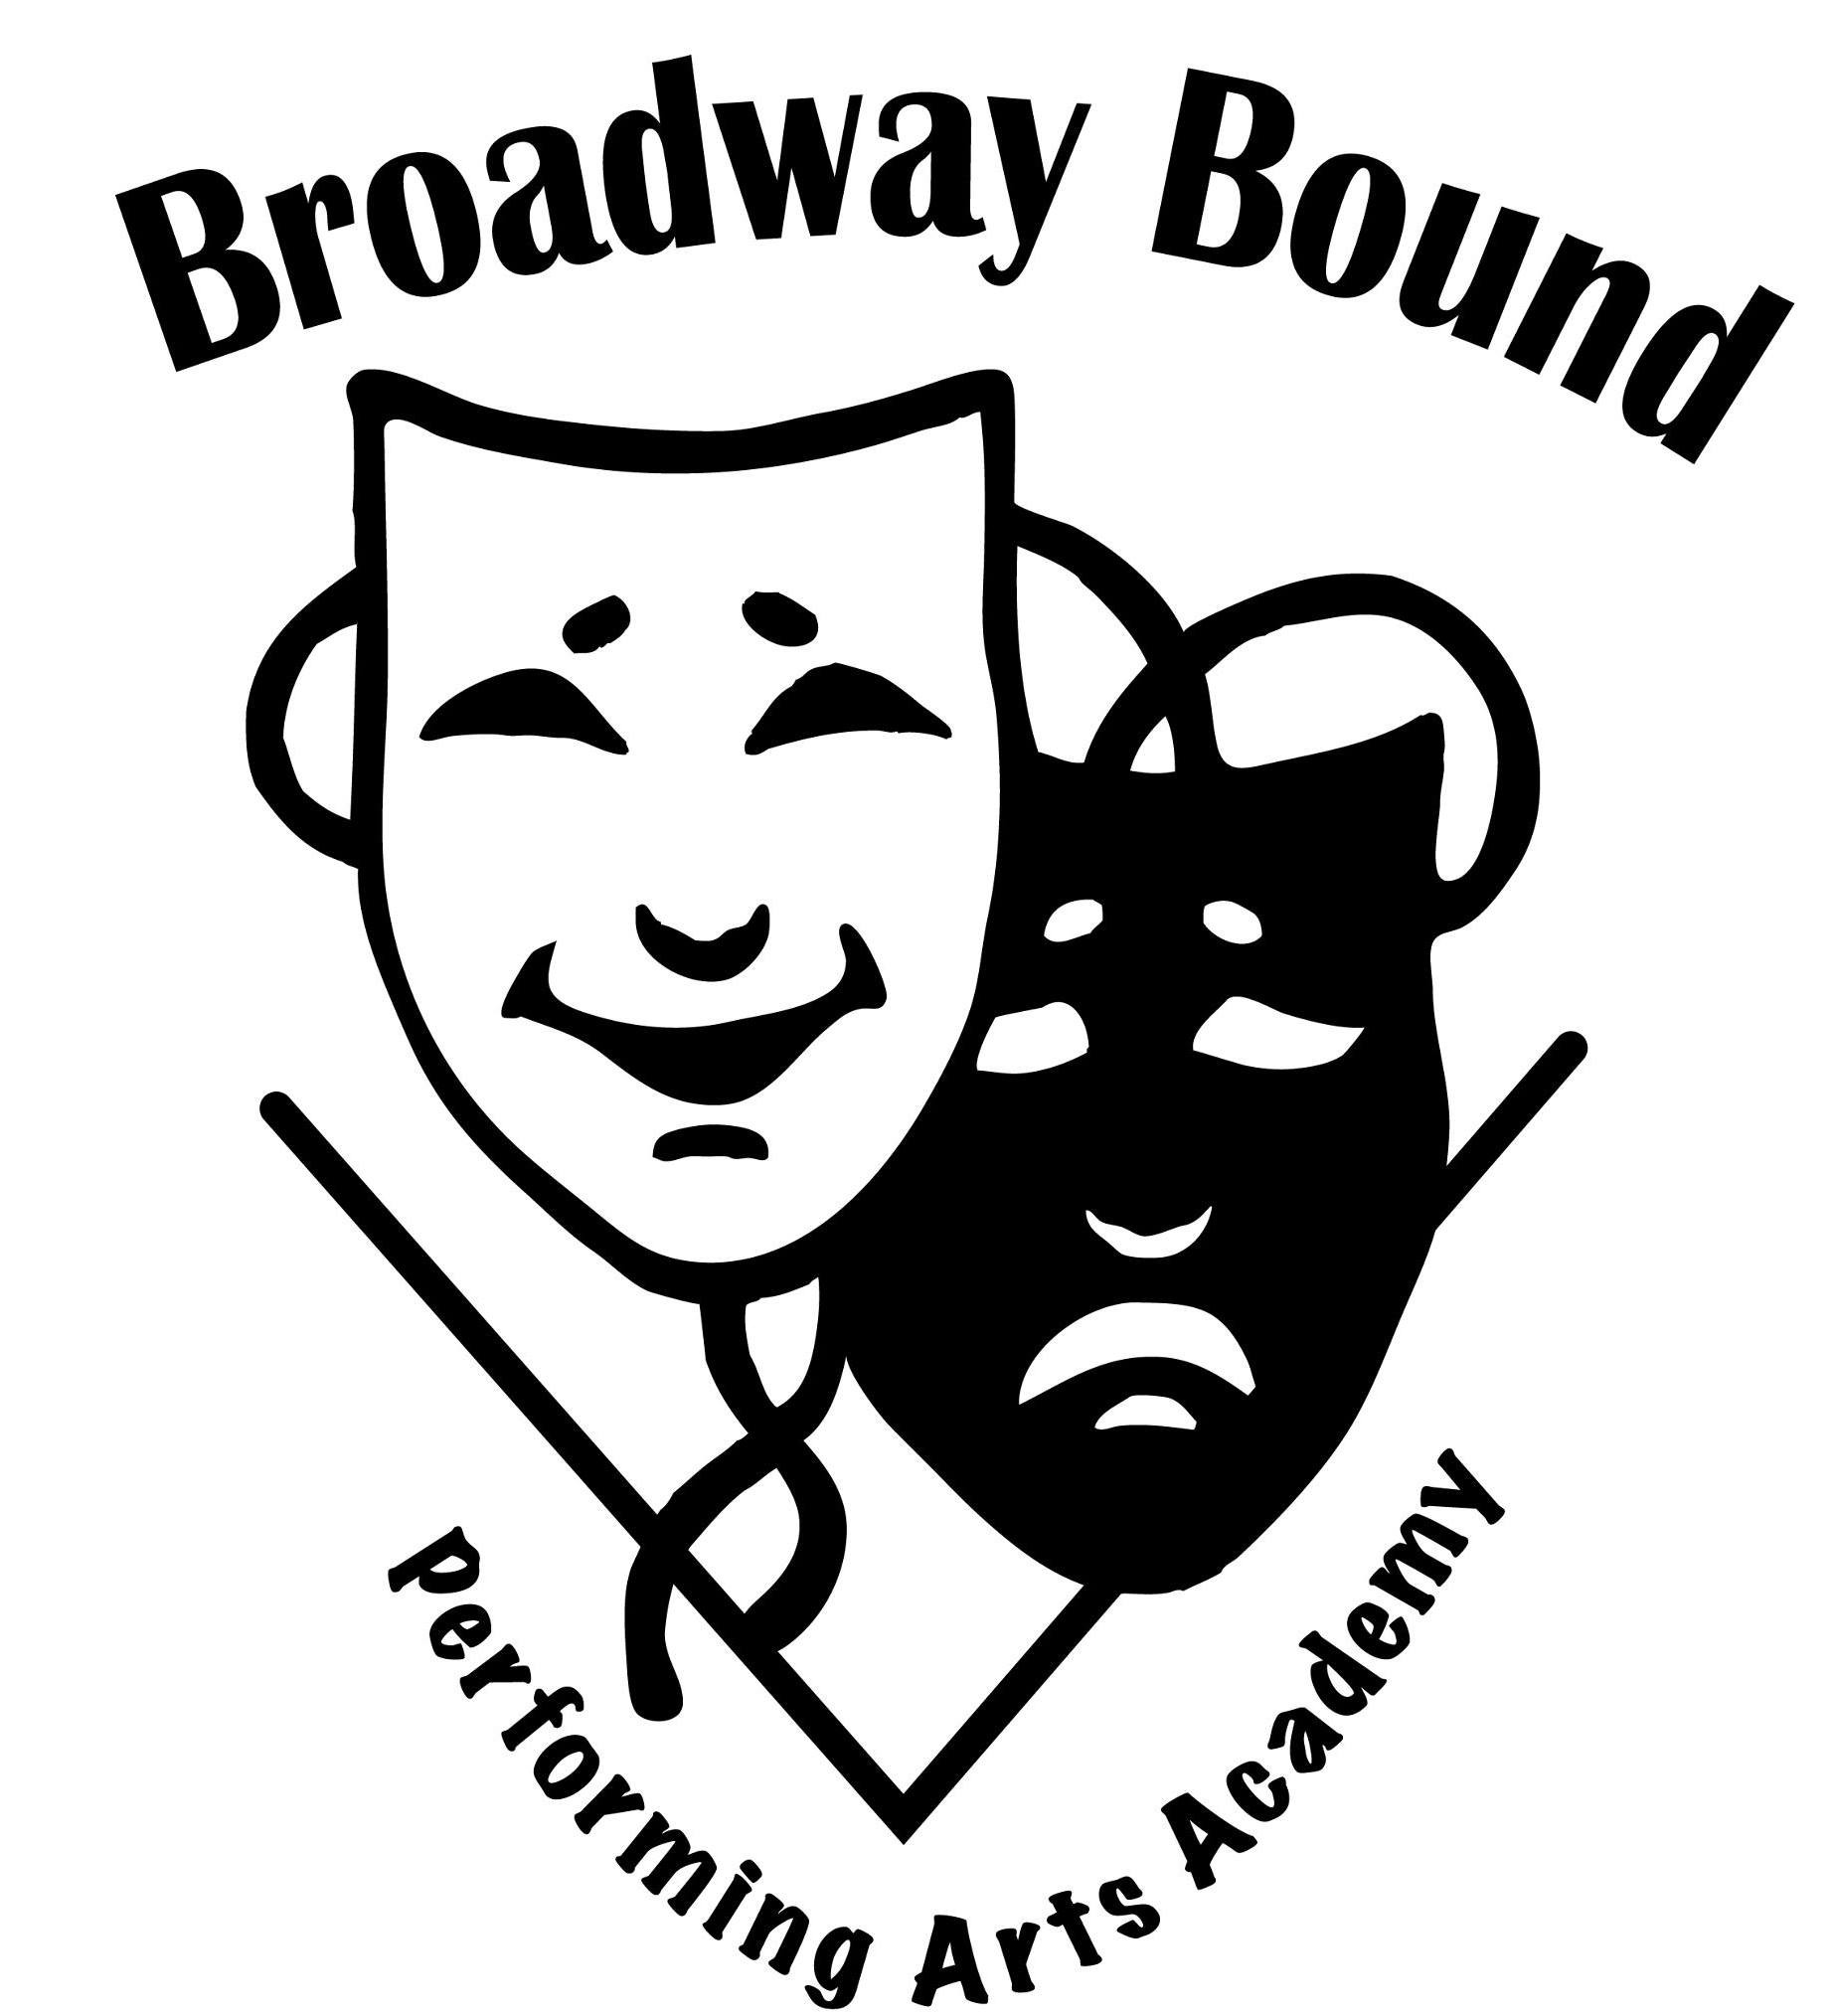 Broadway Bound Performing Arts Academy